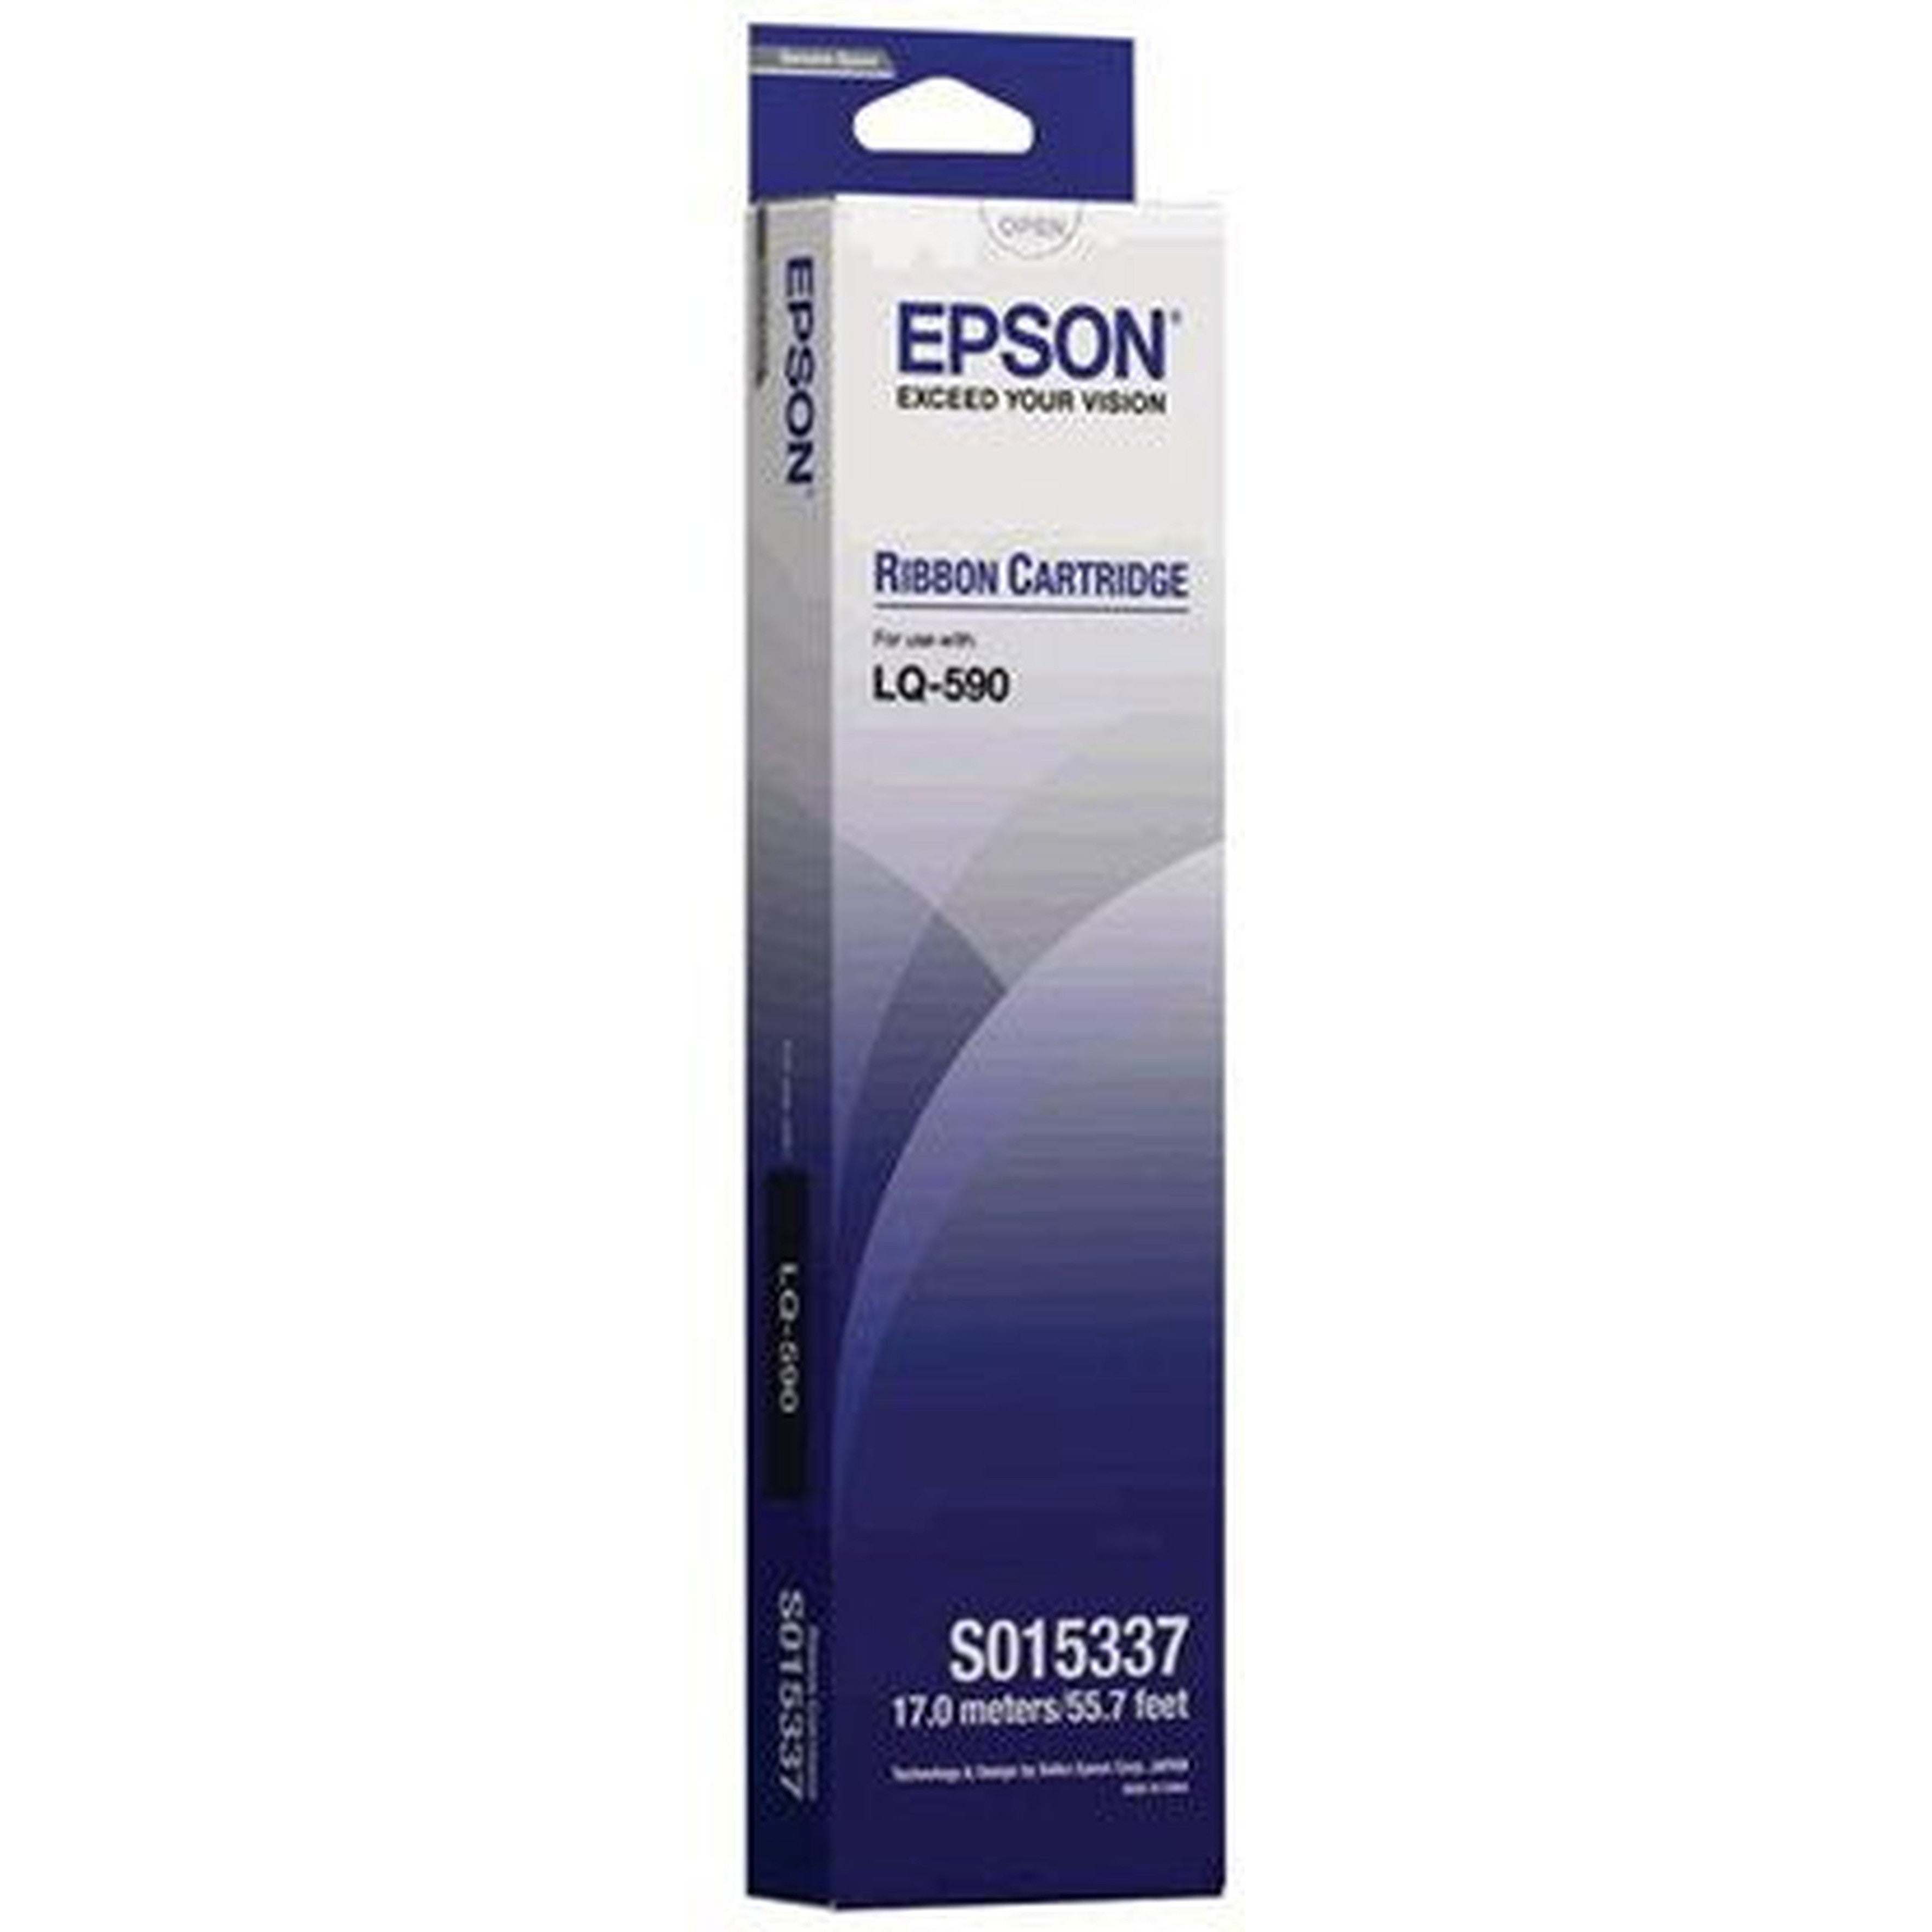 Epson Ribbon Lq 590 S015337 S015637-Inks And Toners-Epson-Star Light Kuwait